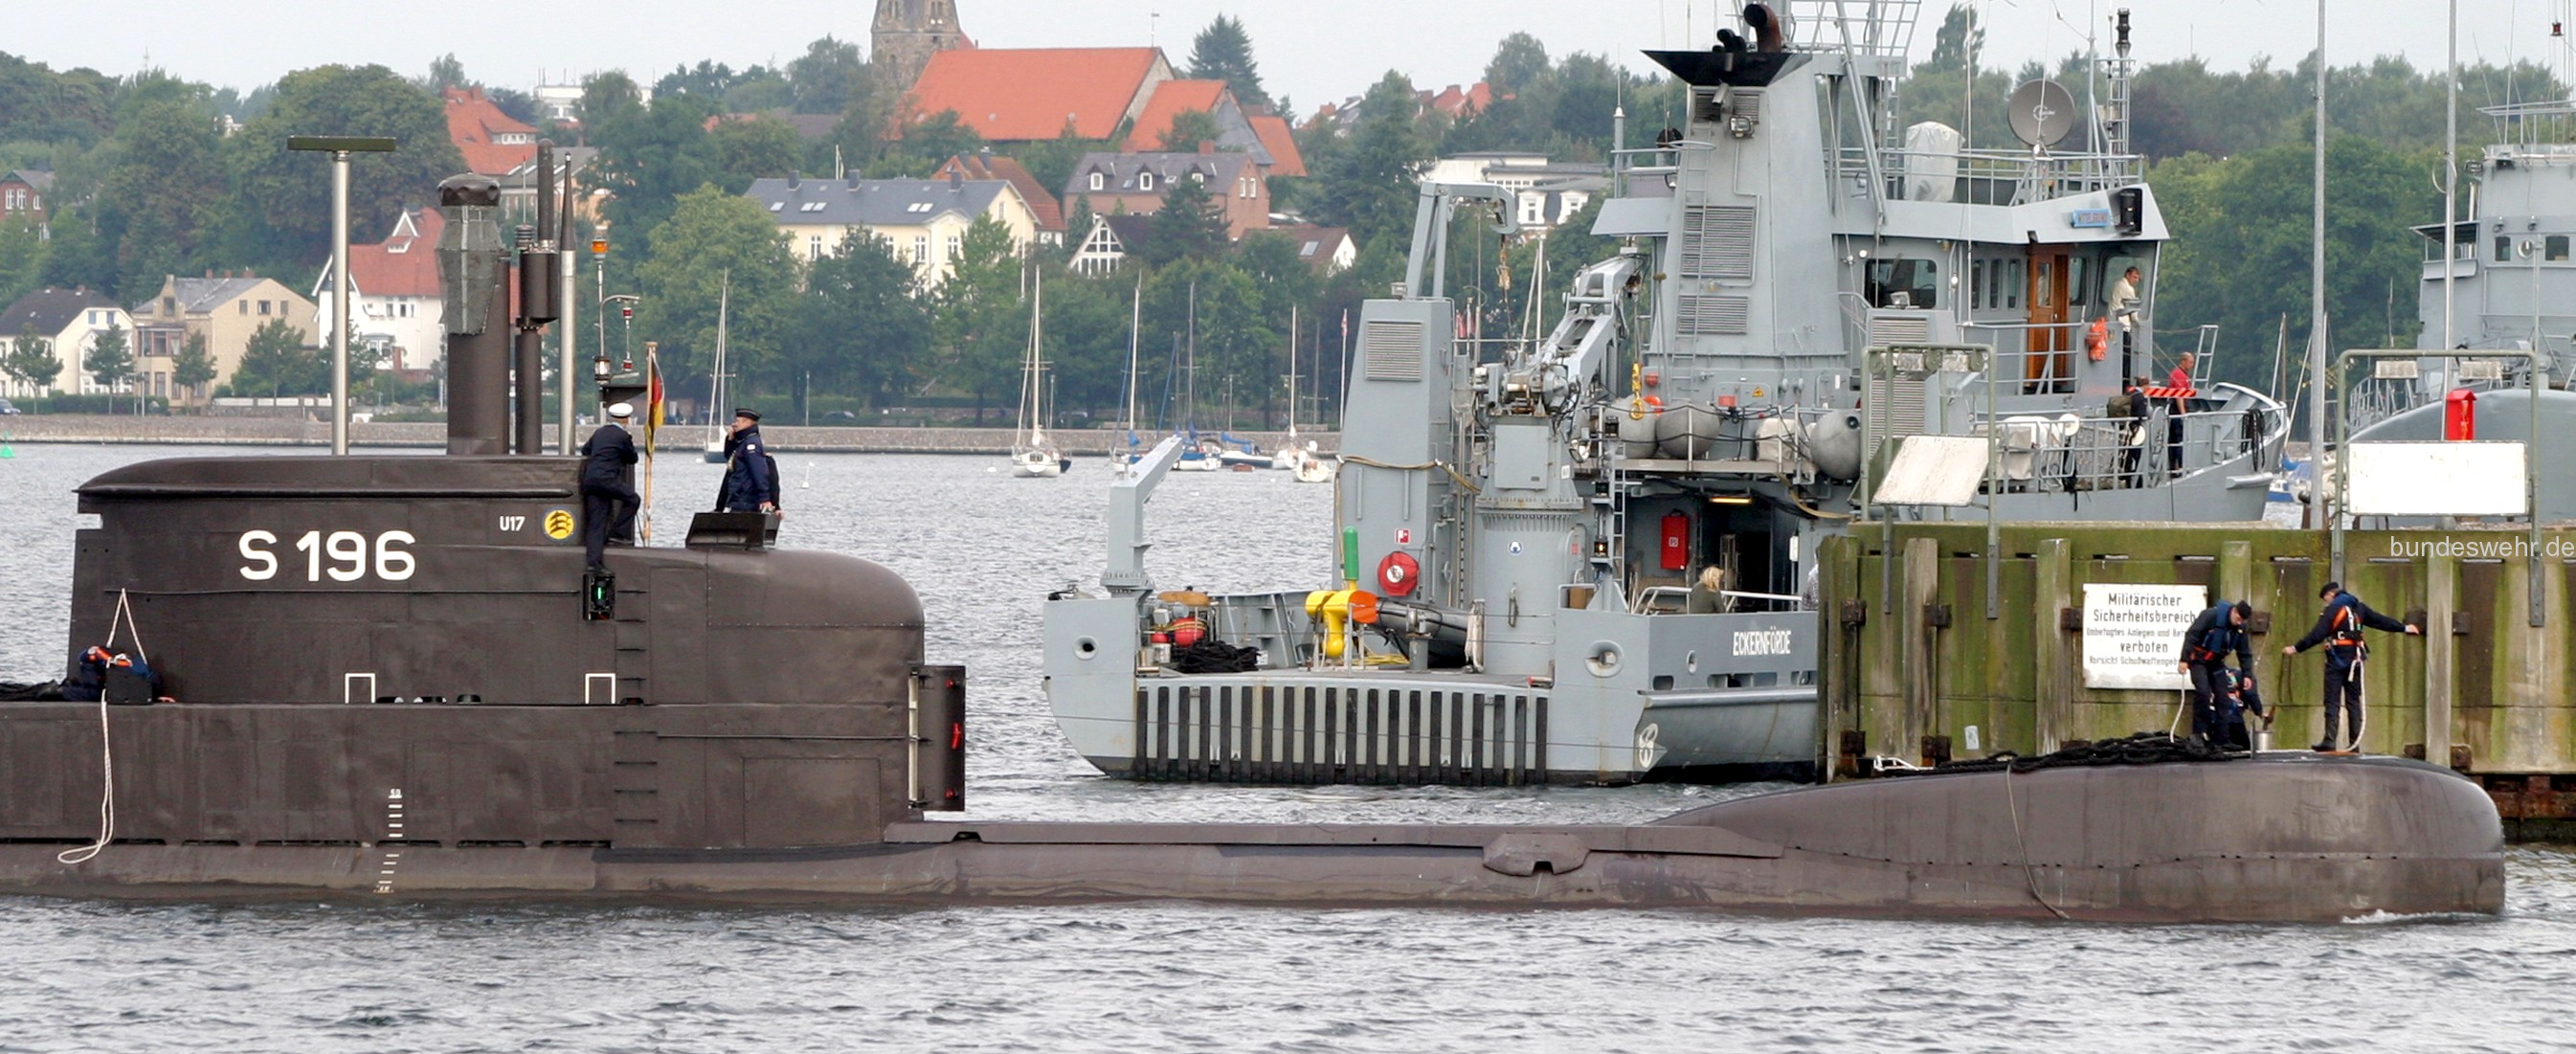 s-196 fgs u17 type 206 class submarine german navy 05